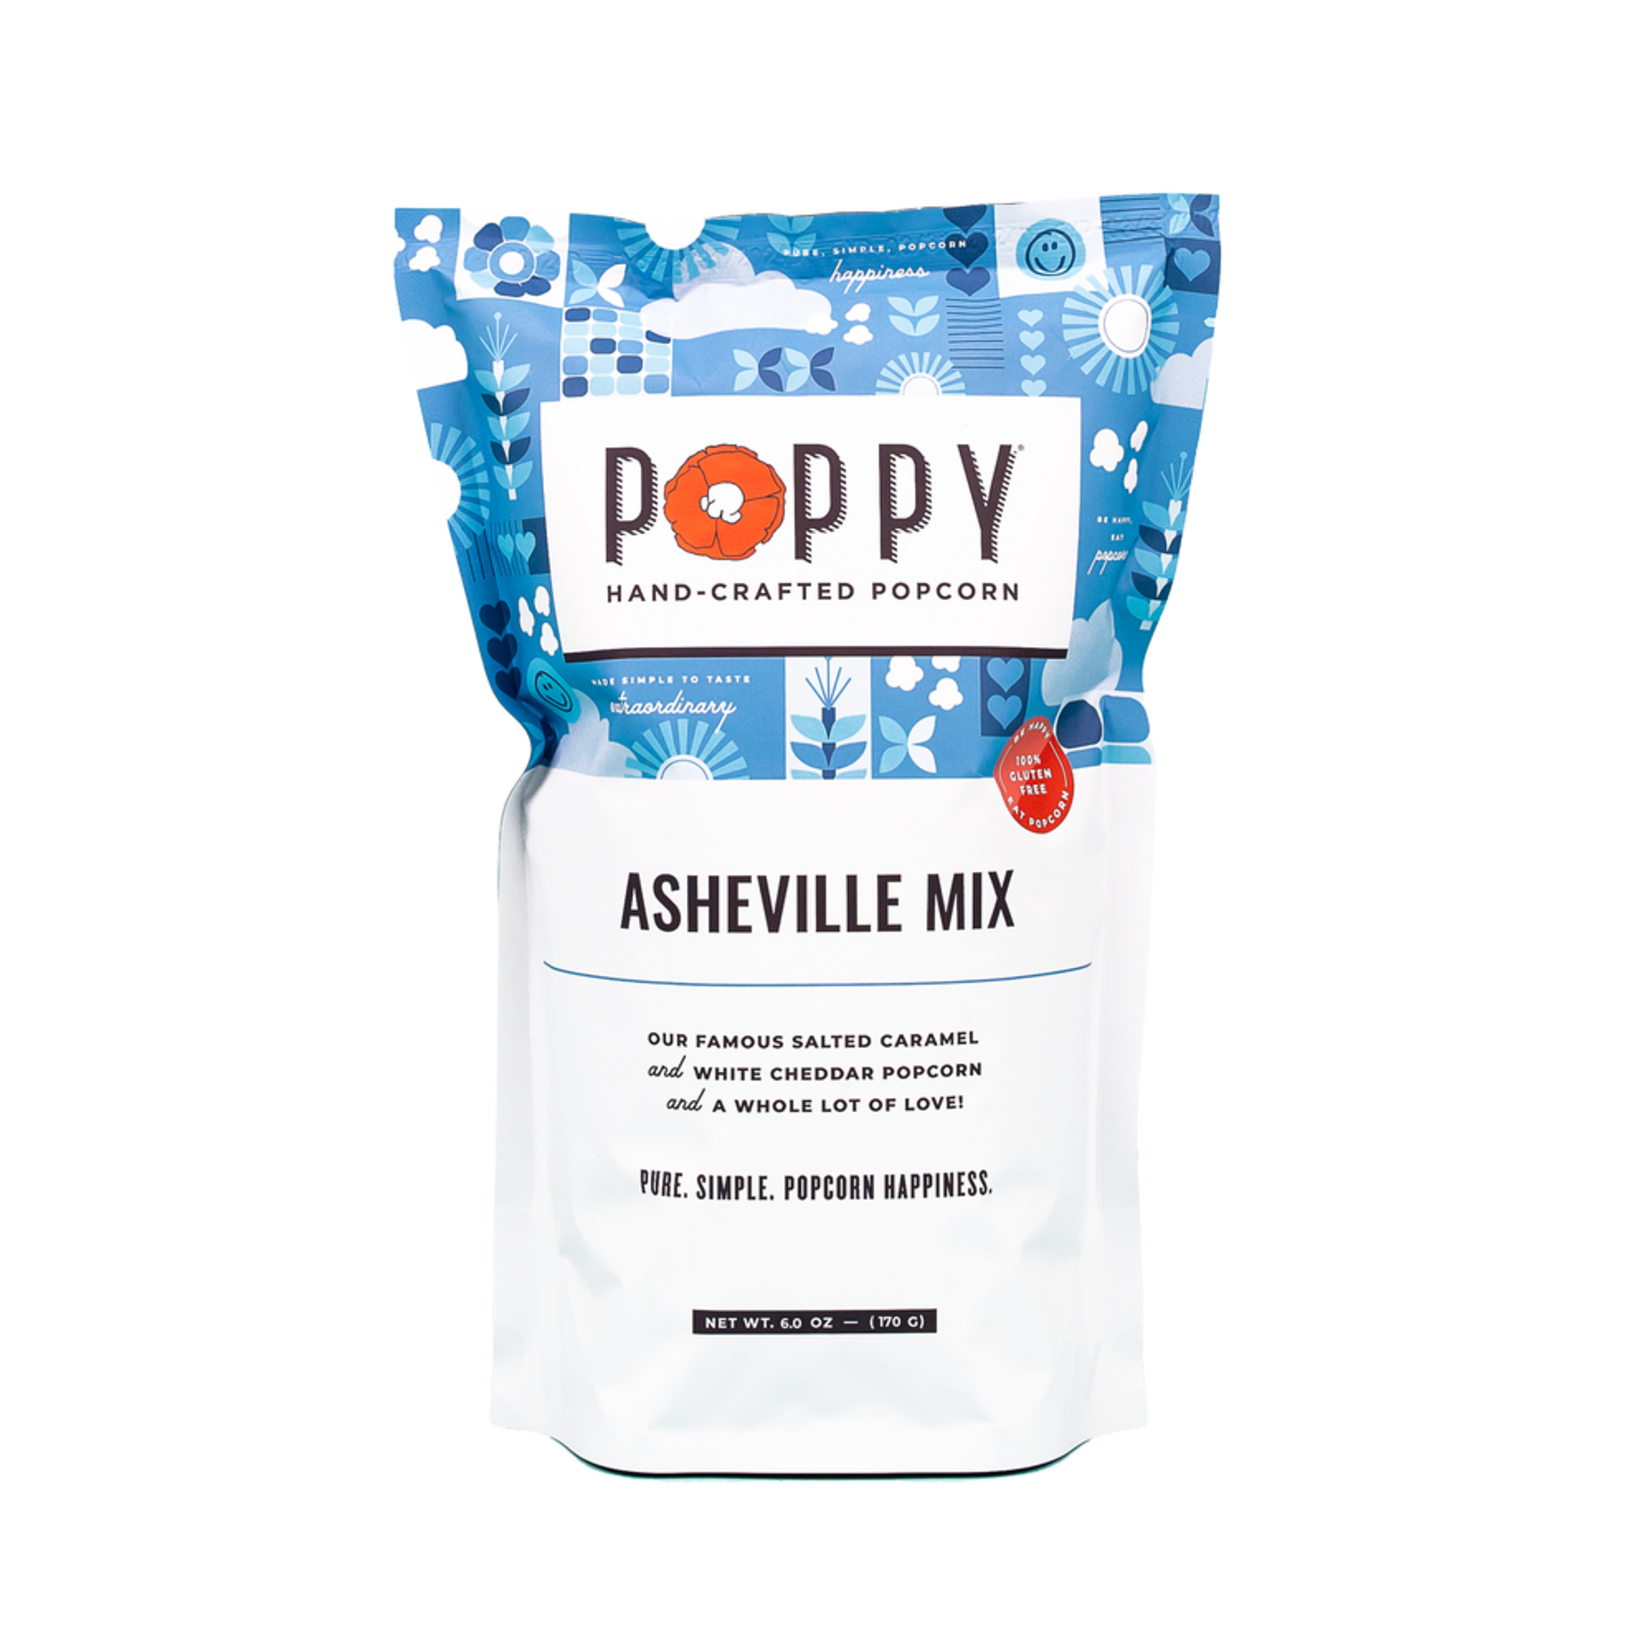 Poppy Handcrafted Popcorn Poppy Handcrafted Popcorn - Asheville Mix